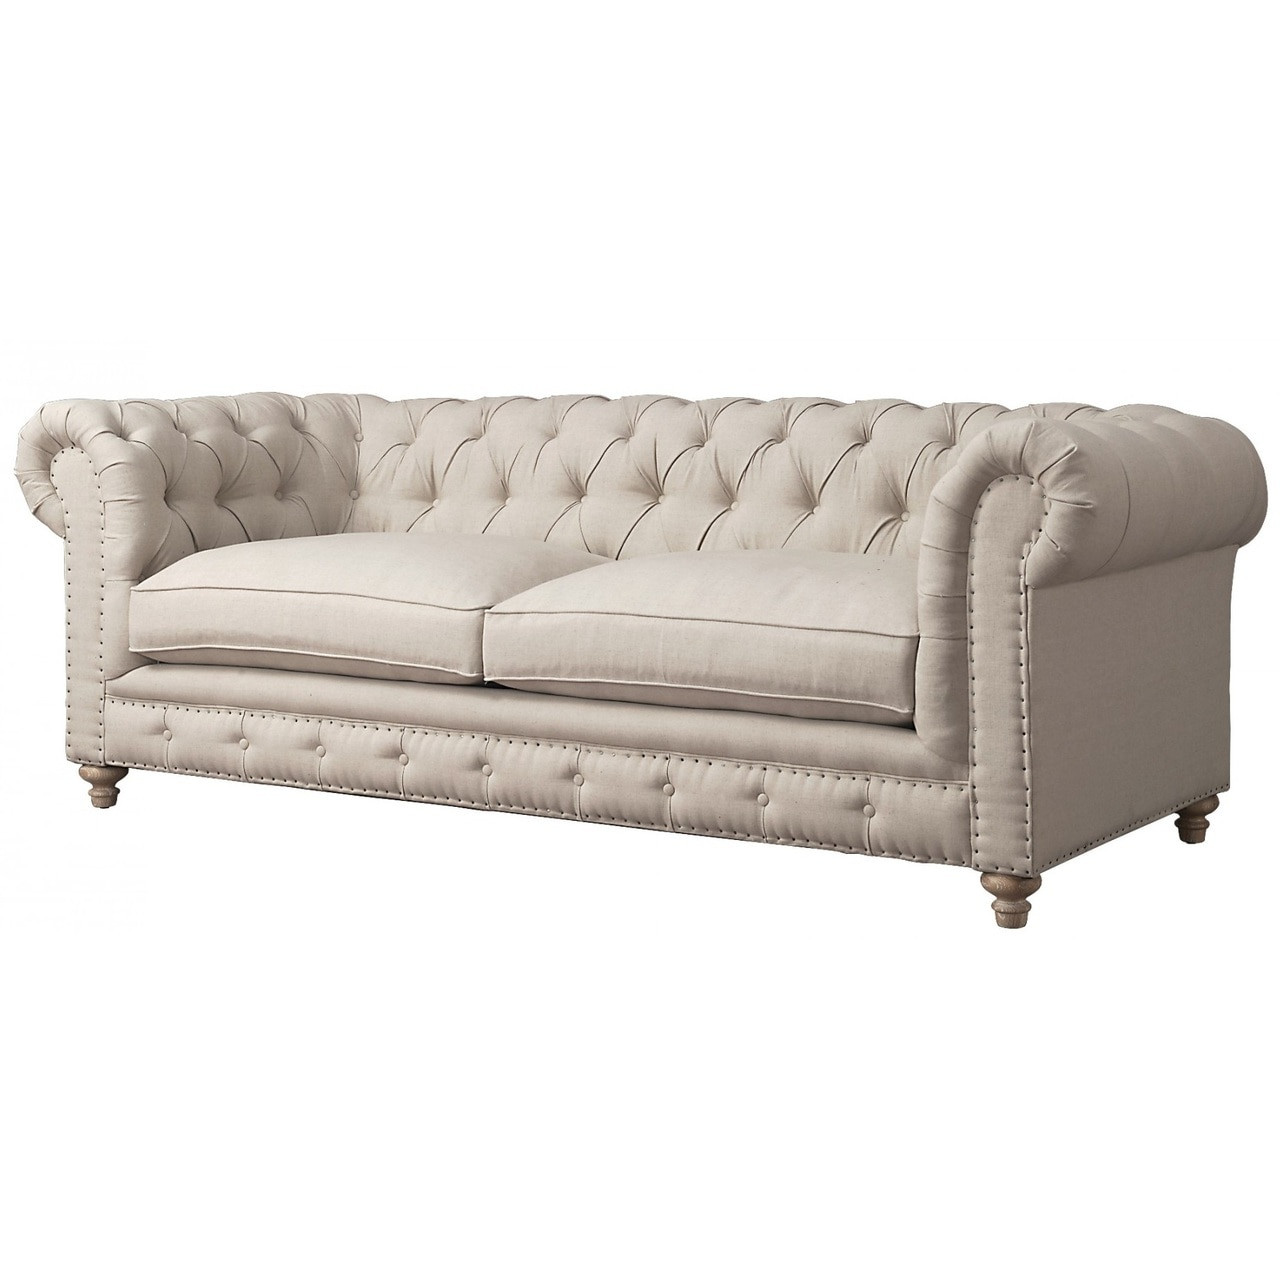 Sofa Beige
 Oxford Beige Linen Upholstered Chesterfield Sofa